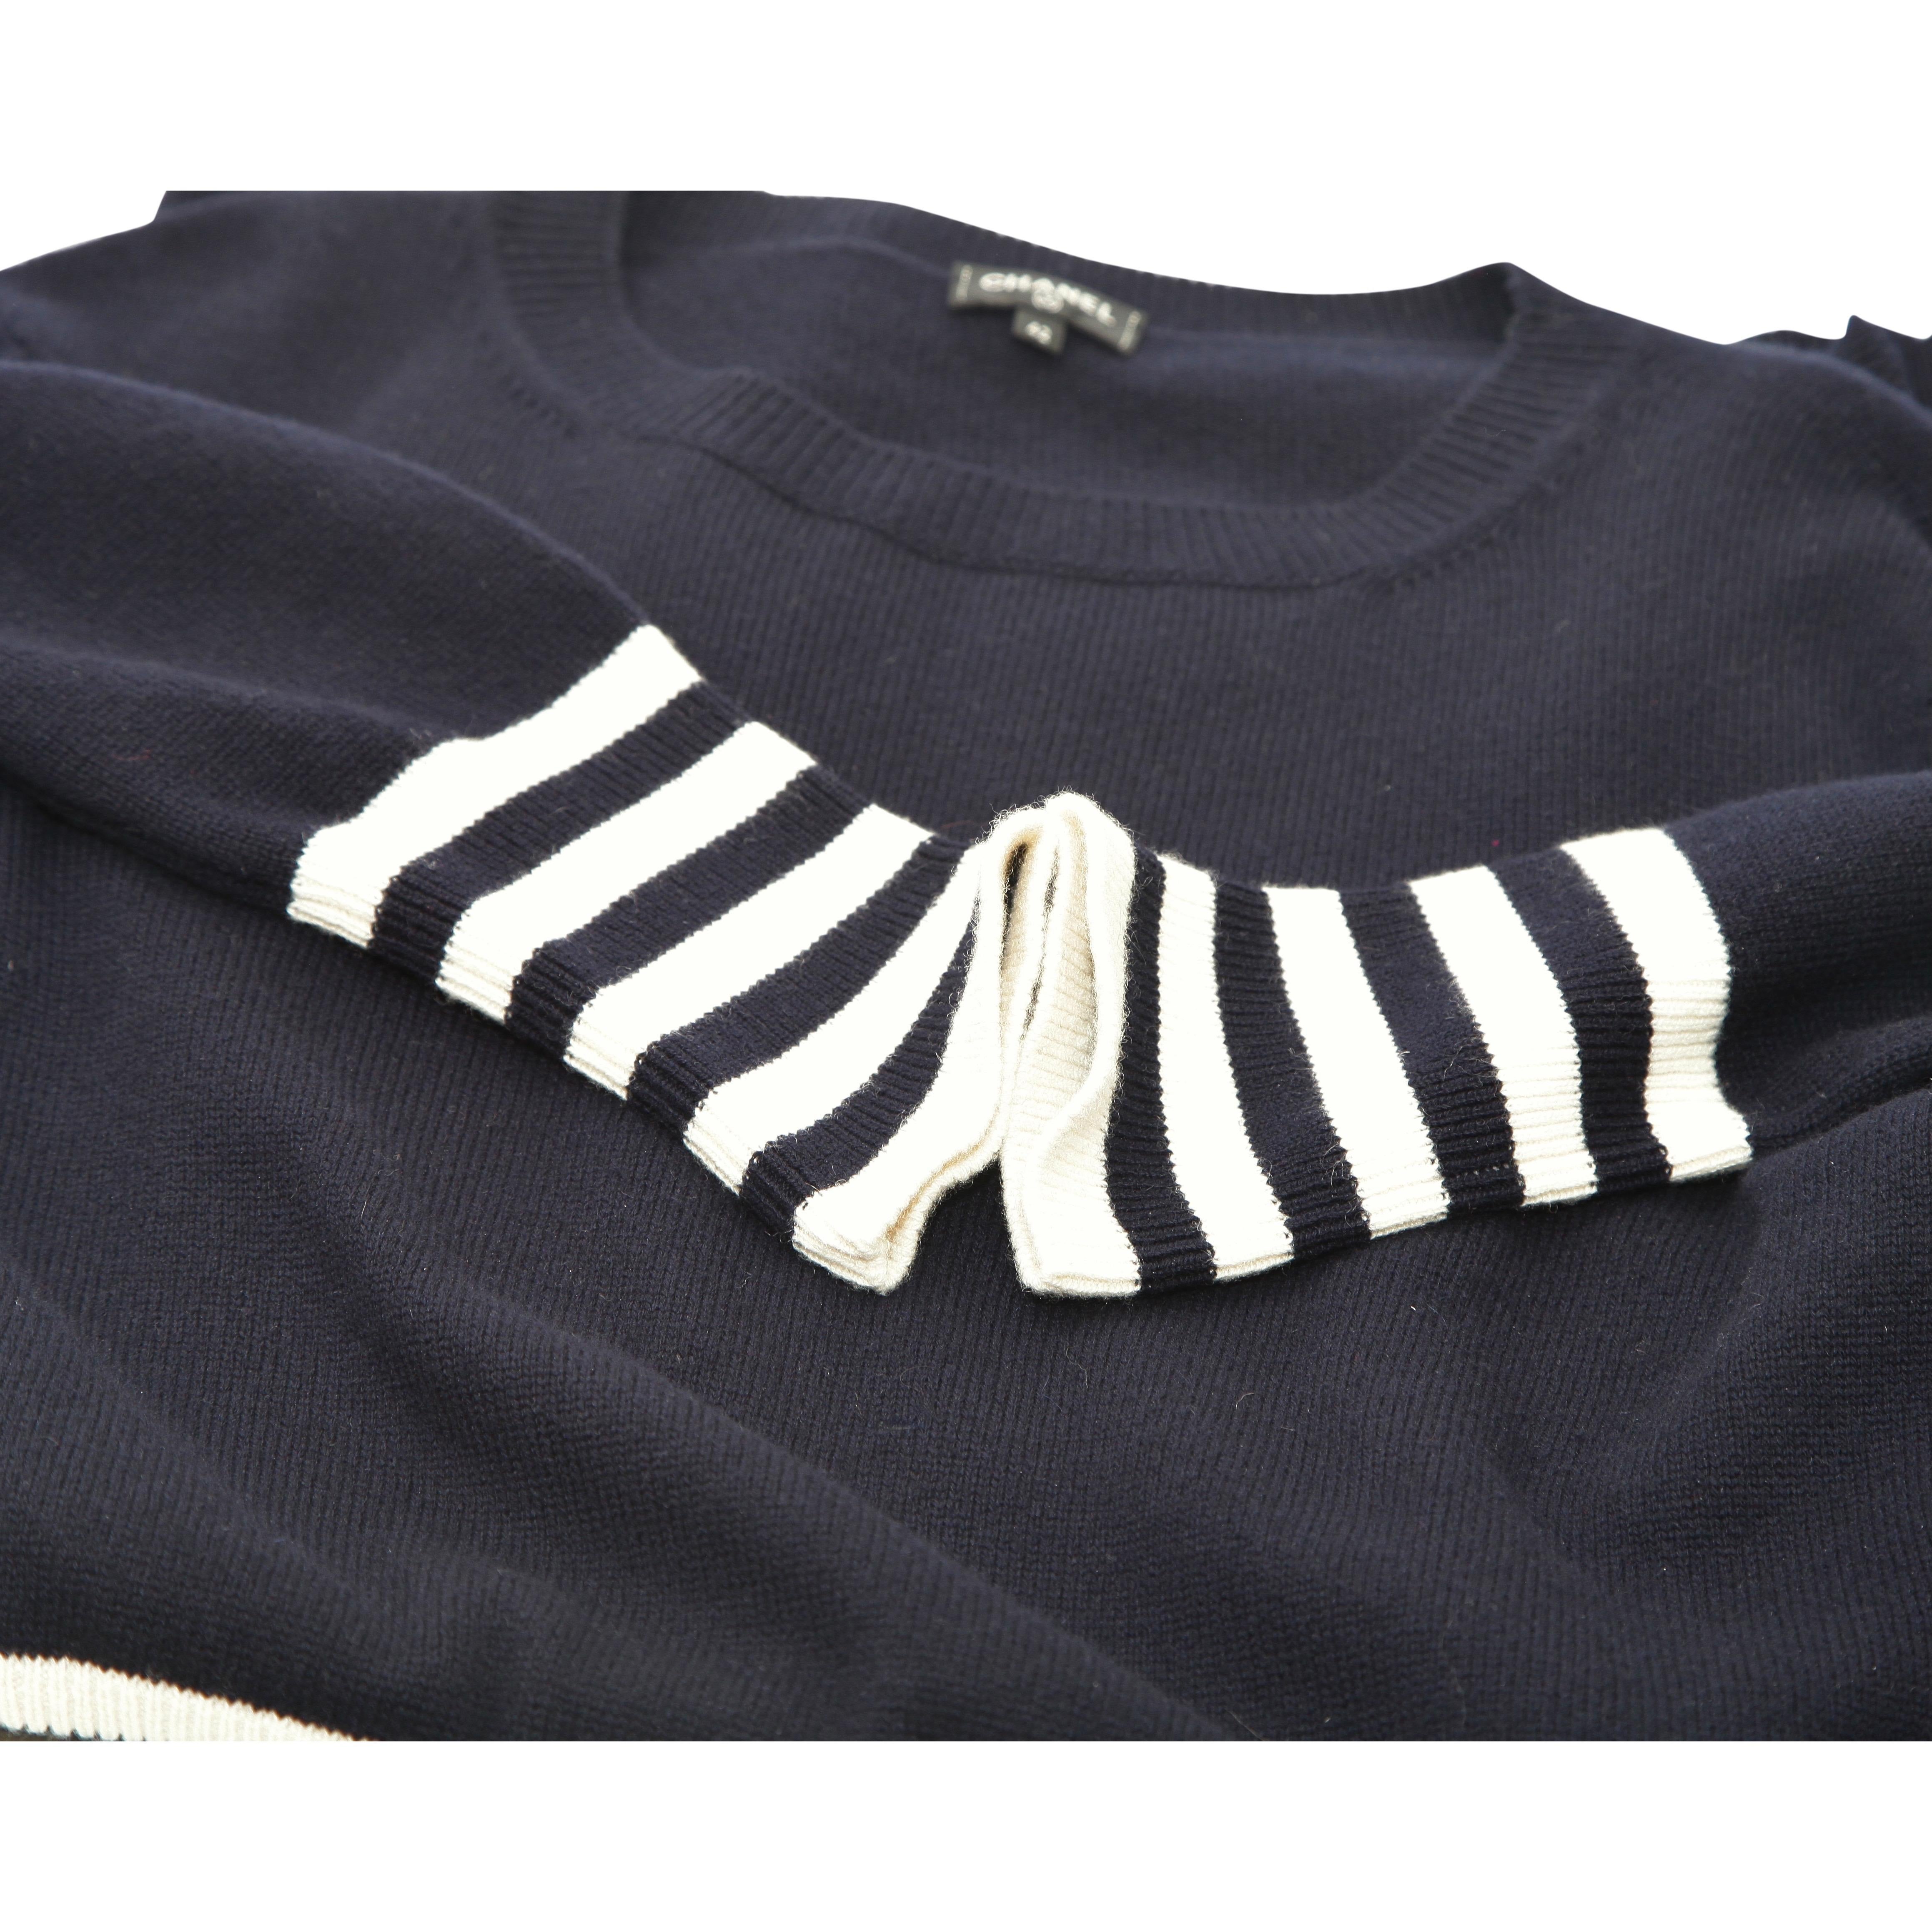 CHANEL Sweater Dress Tunic Knit Navy Striped Long Sleeve Cashmere Sz 42 2016 16K 1